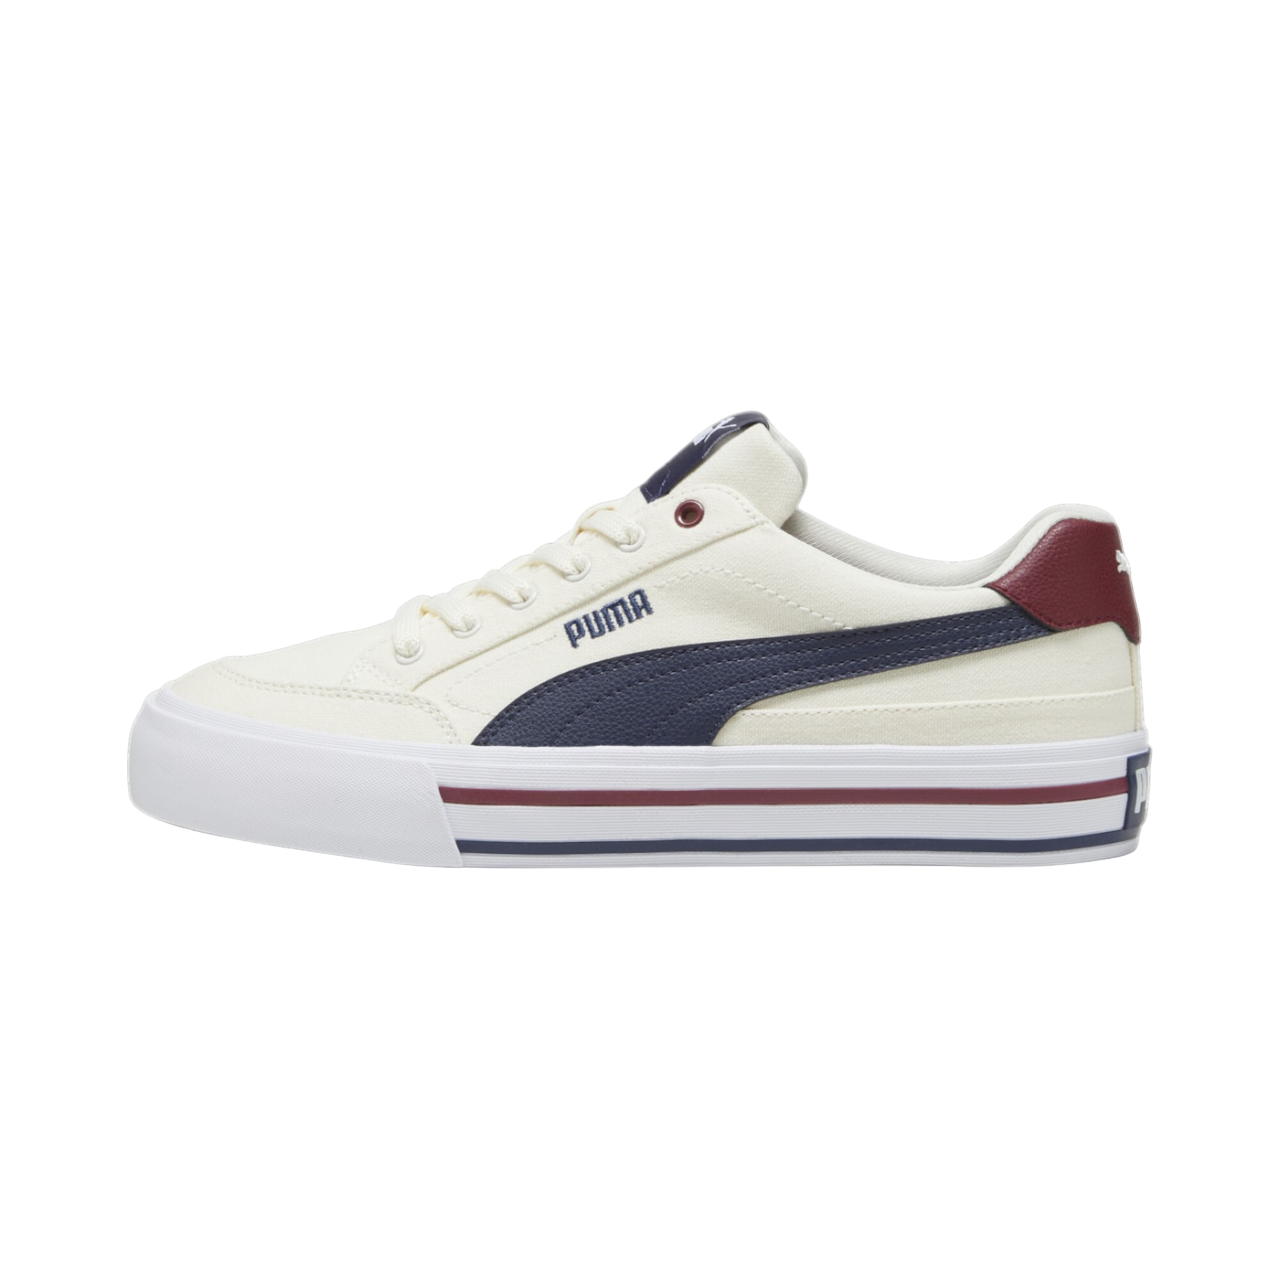 Puma Court Classic Vulc FS 396353-01 white-blue adult sneakers shoe